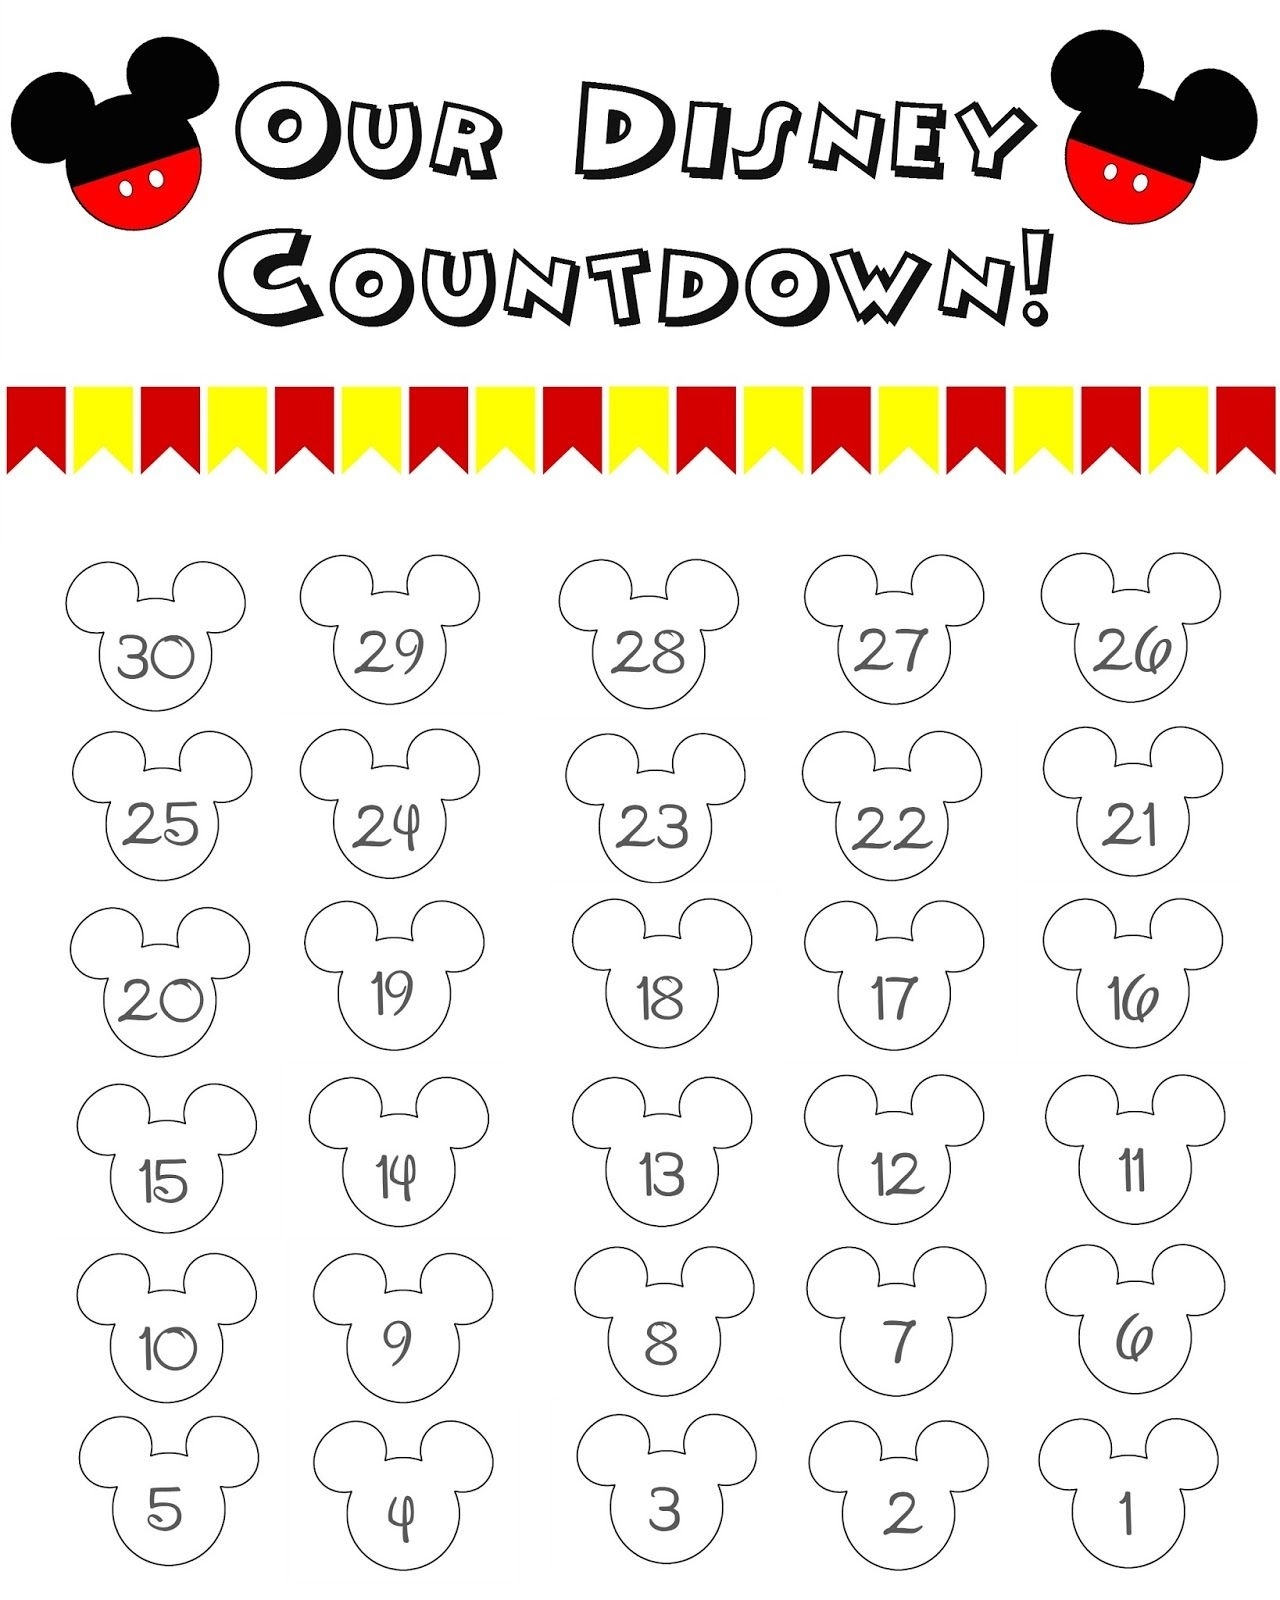 Disney World Countdown Calendar - Free Printable | The Momma Diaries Disney Countdown Calendar App